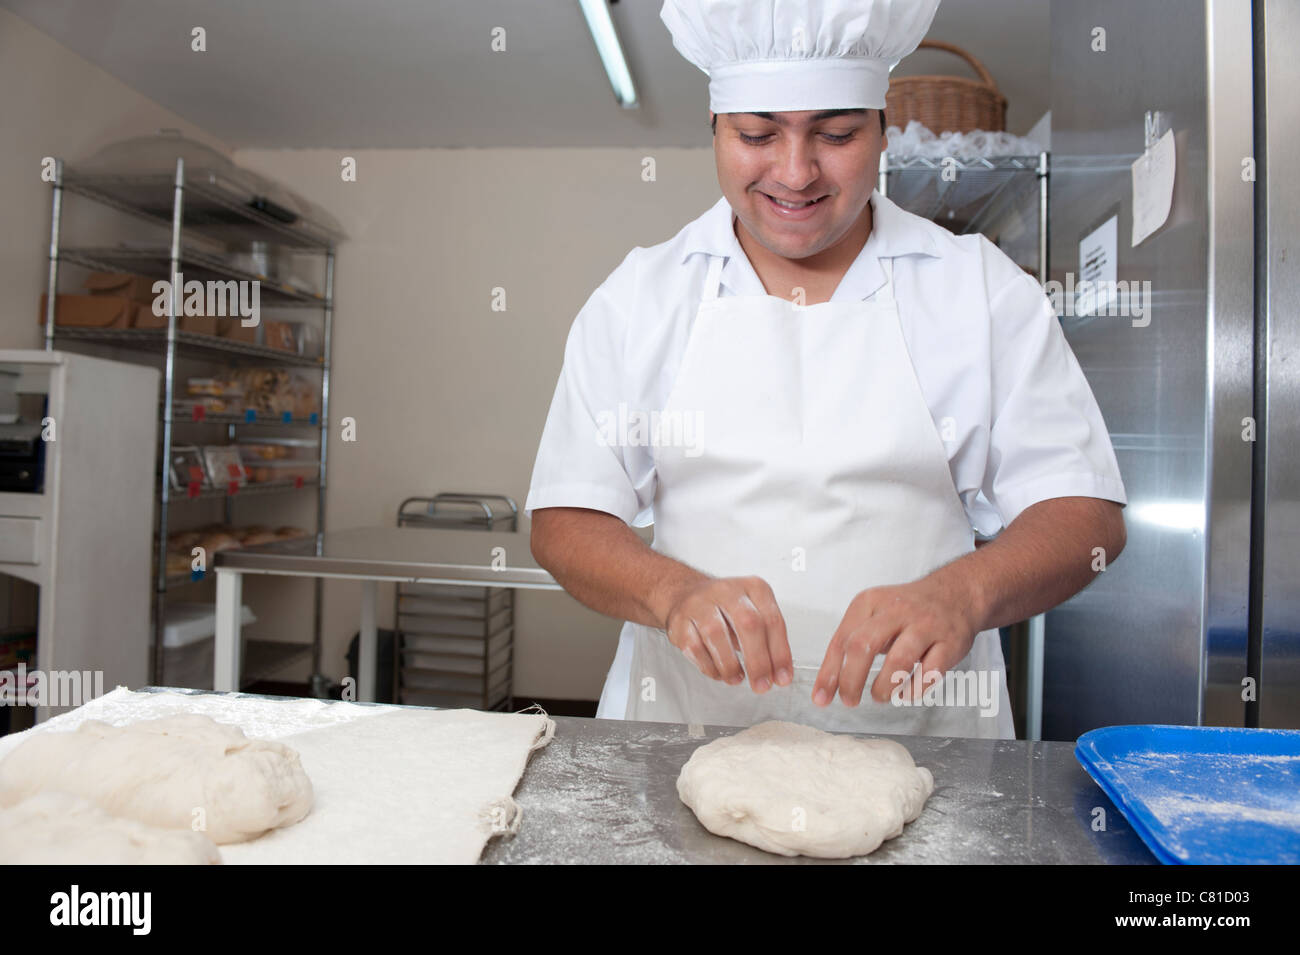 https://c8.alamy.com/comp/C81D03/hispanic-baker-working-in-commercial-kitchen-C81D03.jpg